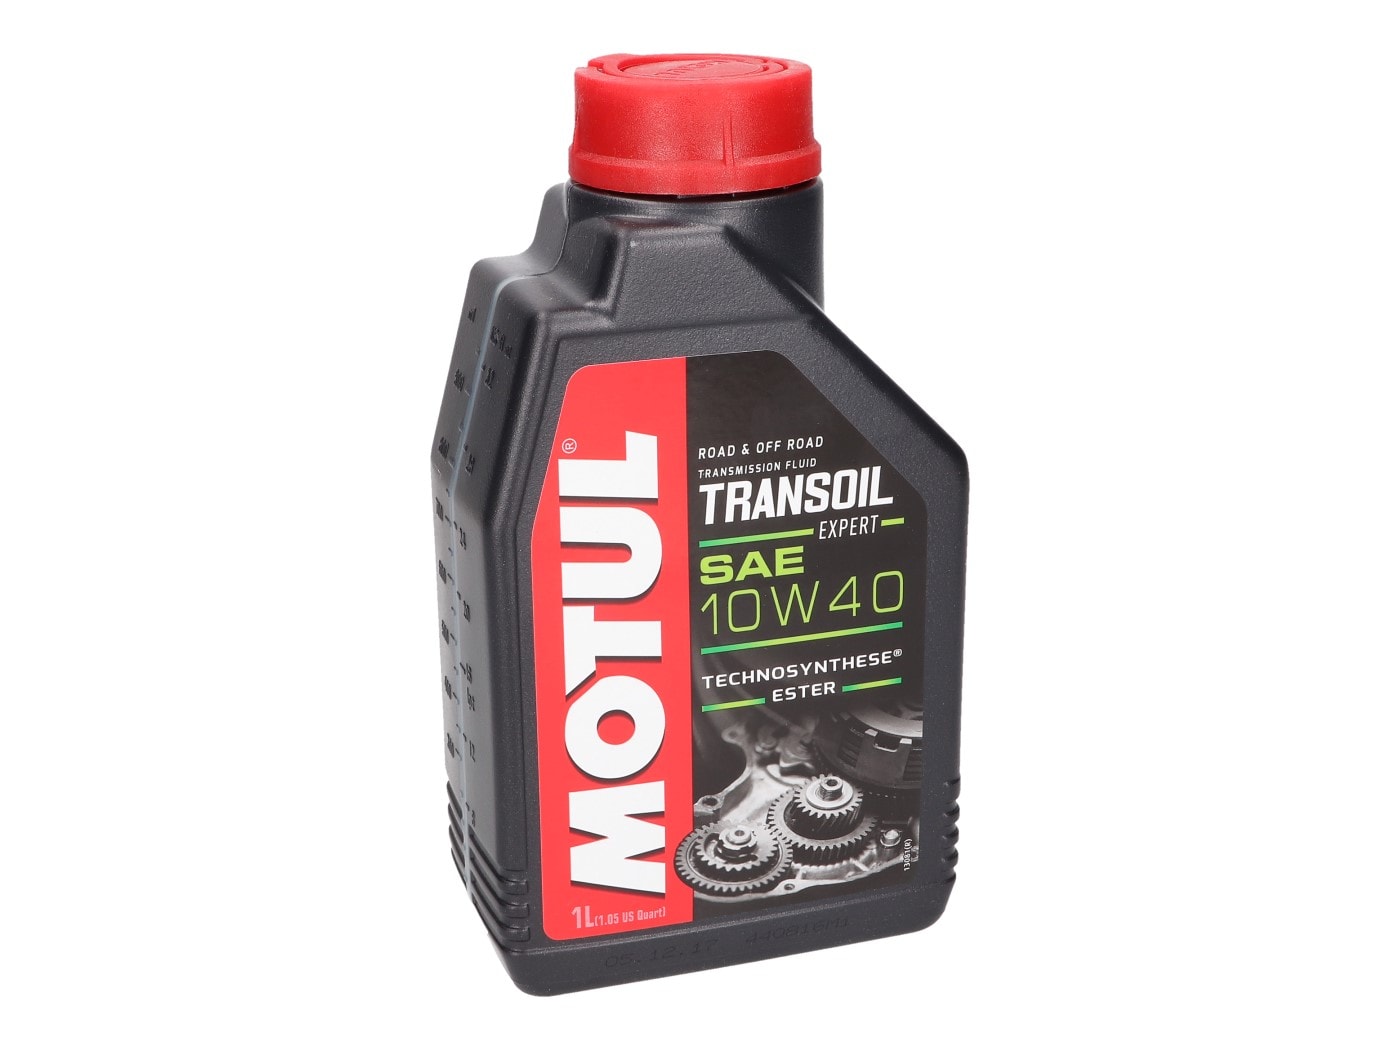 MOTUL Transoil Expert 10W40